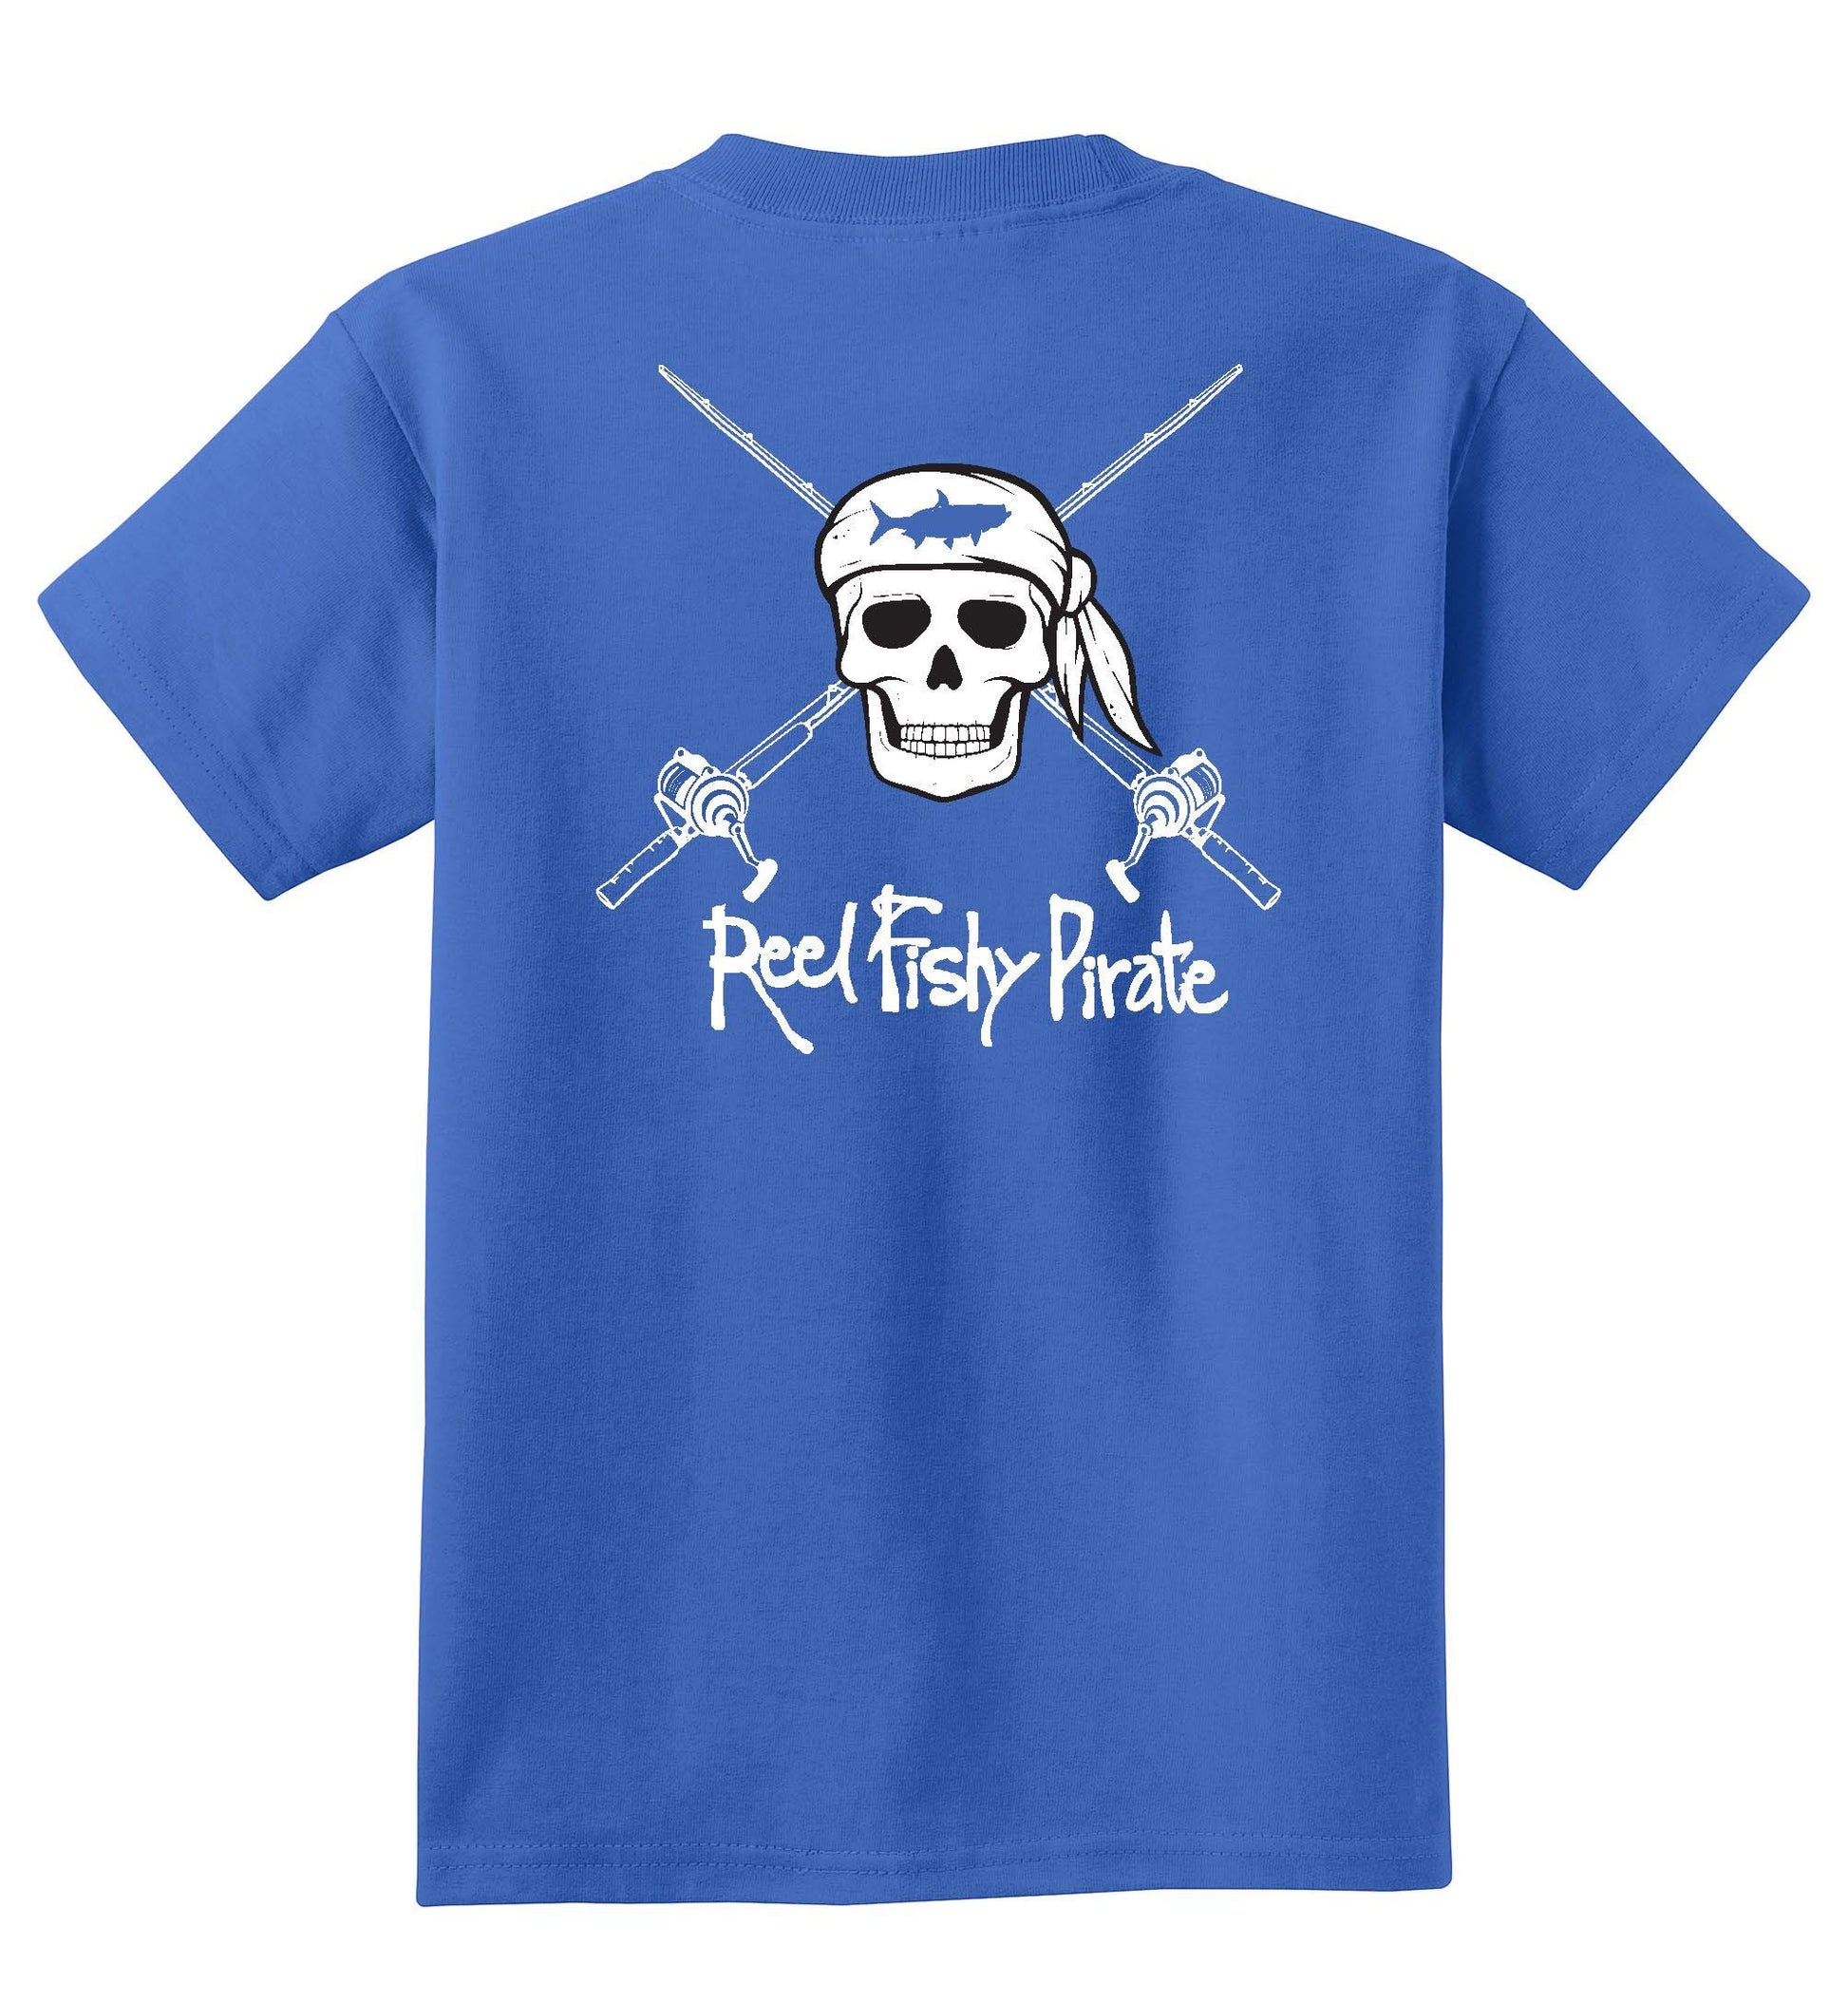 Youth Fishing Cotton T-shirts with Reel Fishy Pirate Skull & Salt Fishing Rods Logo M / Royal